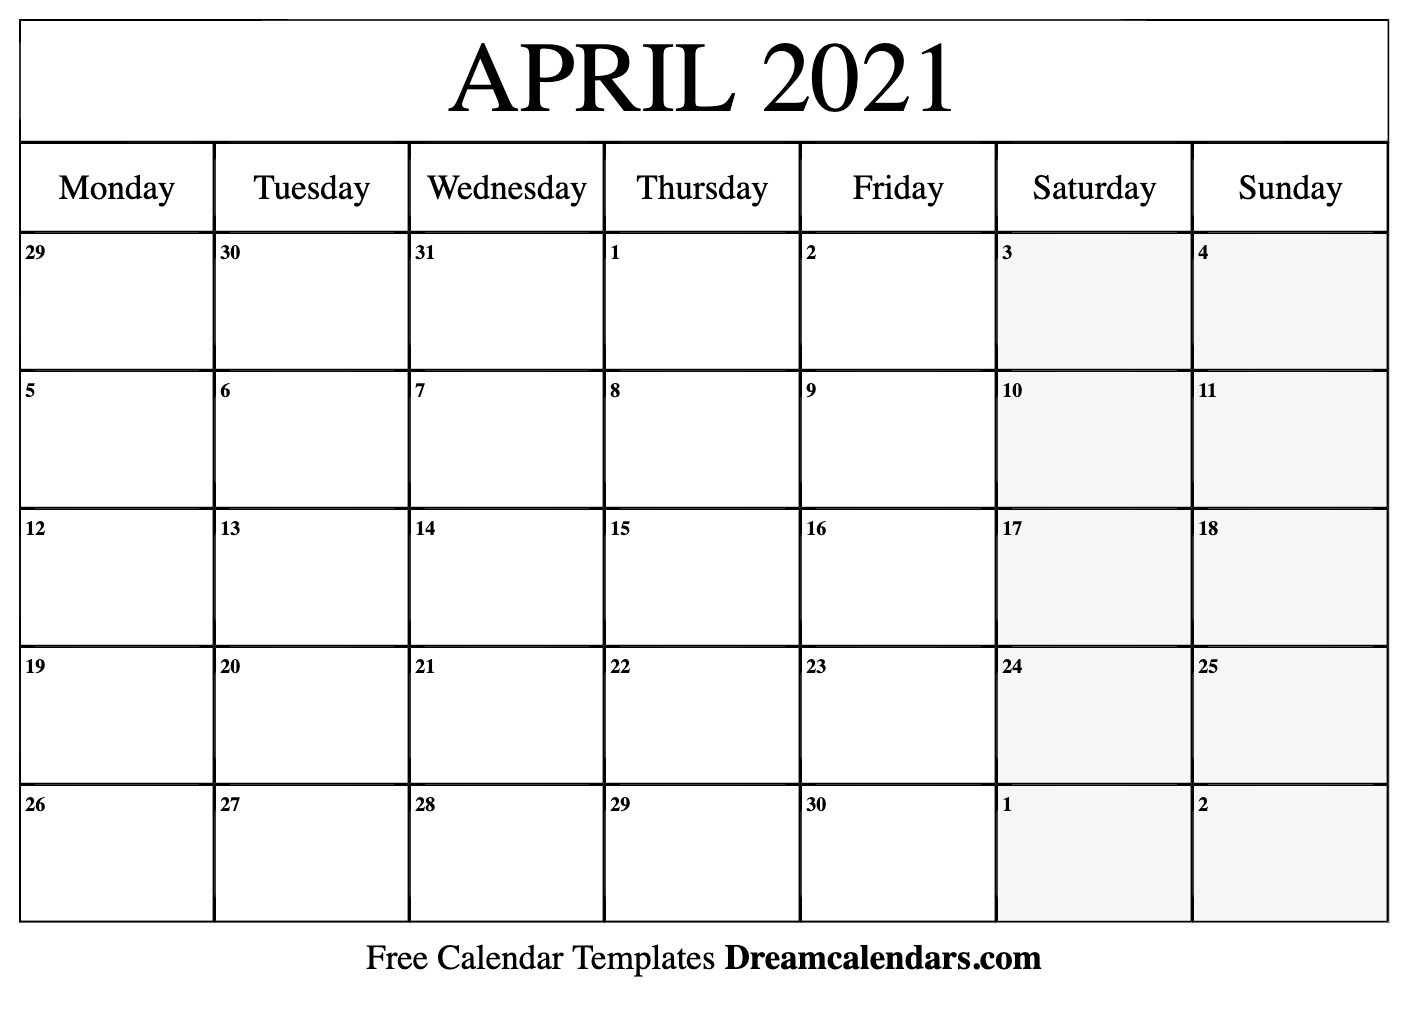 April 2021 Calendar Free Blank Printable With Holidays